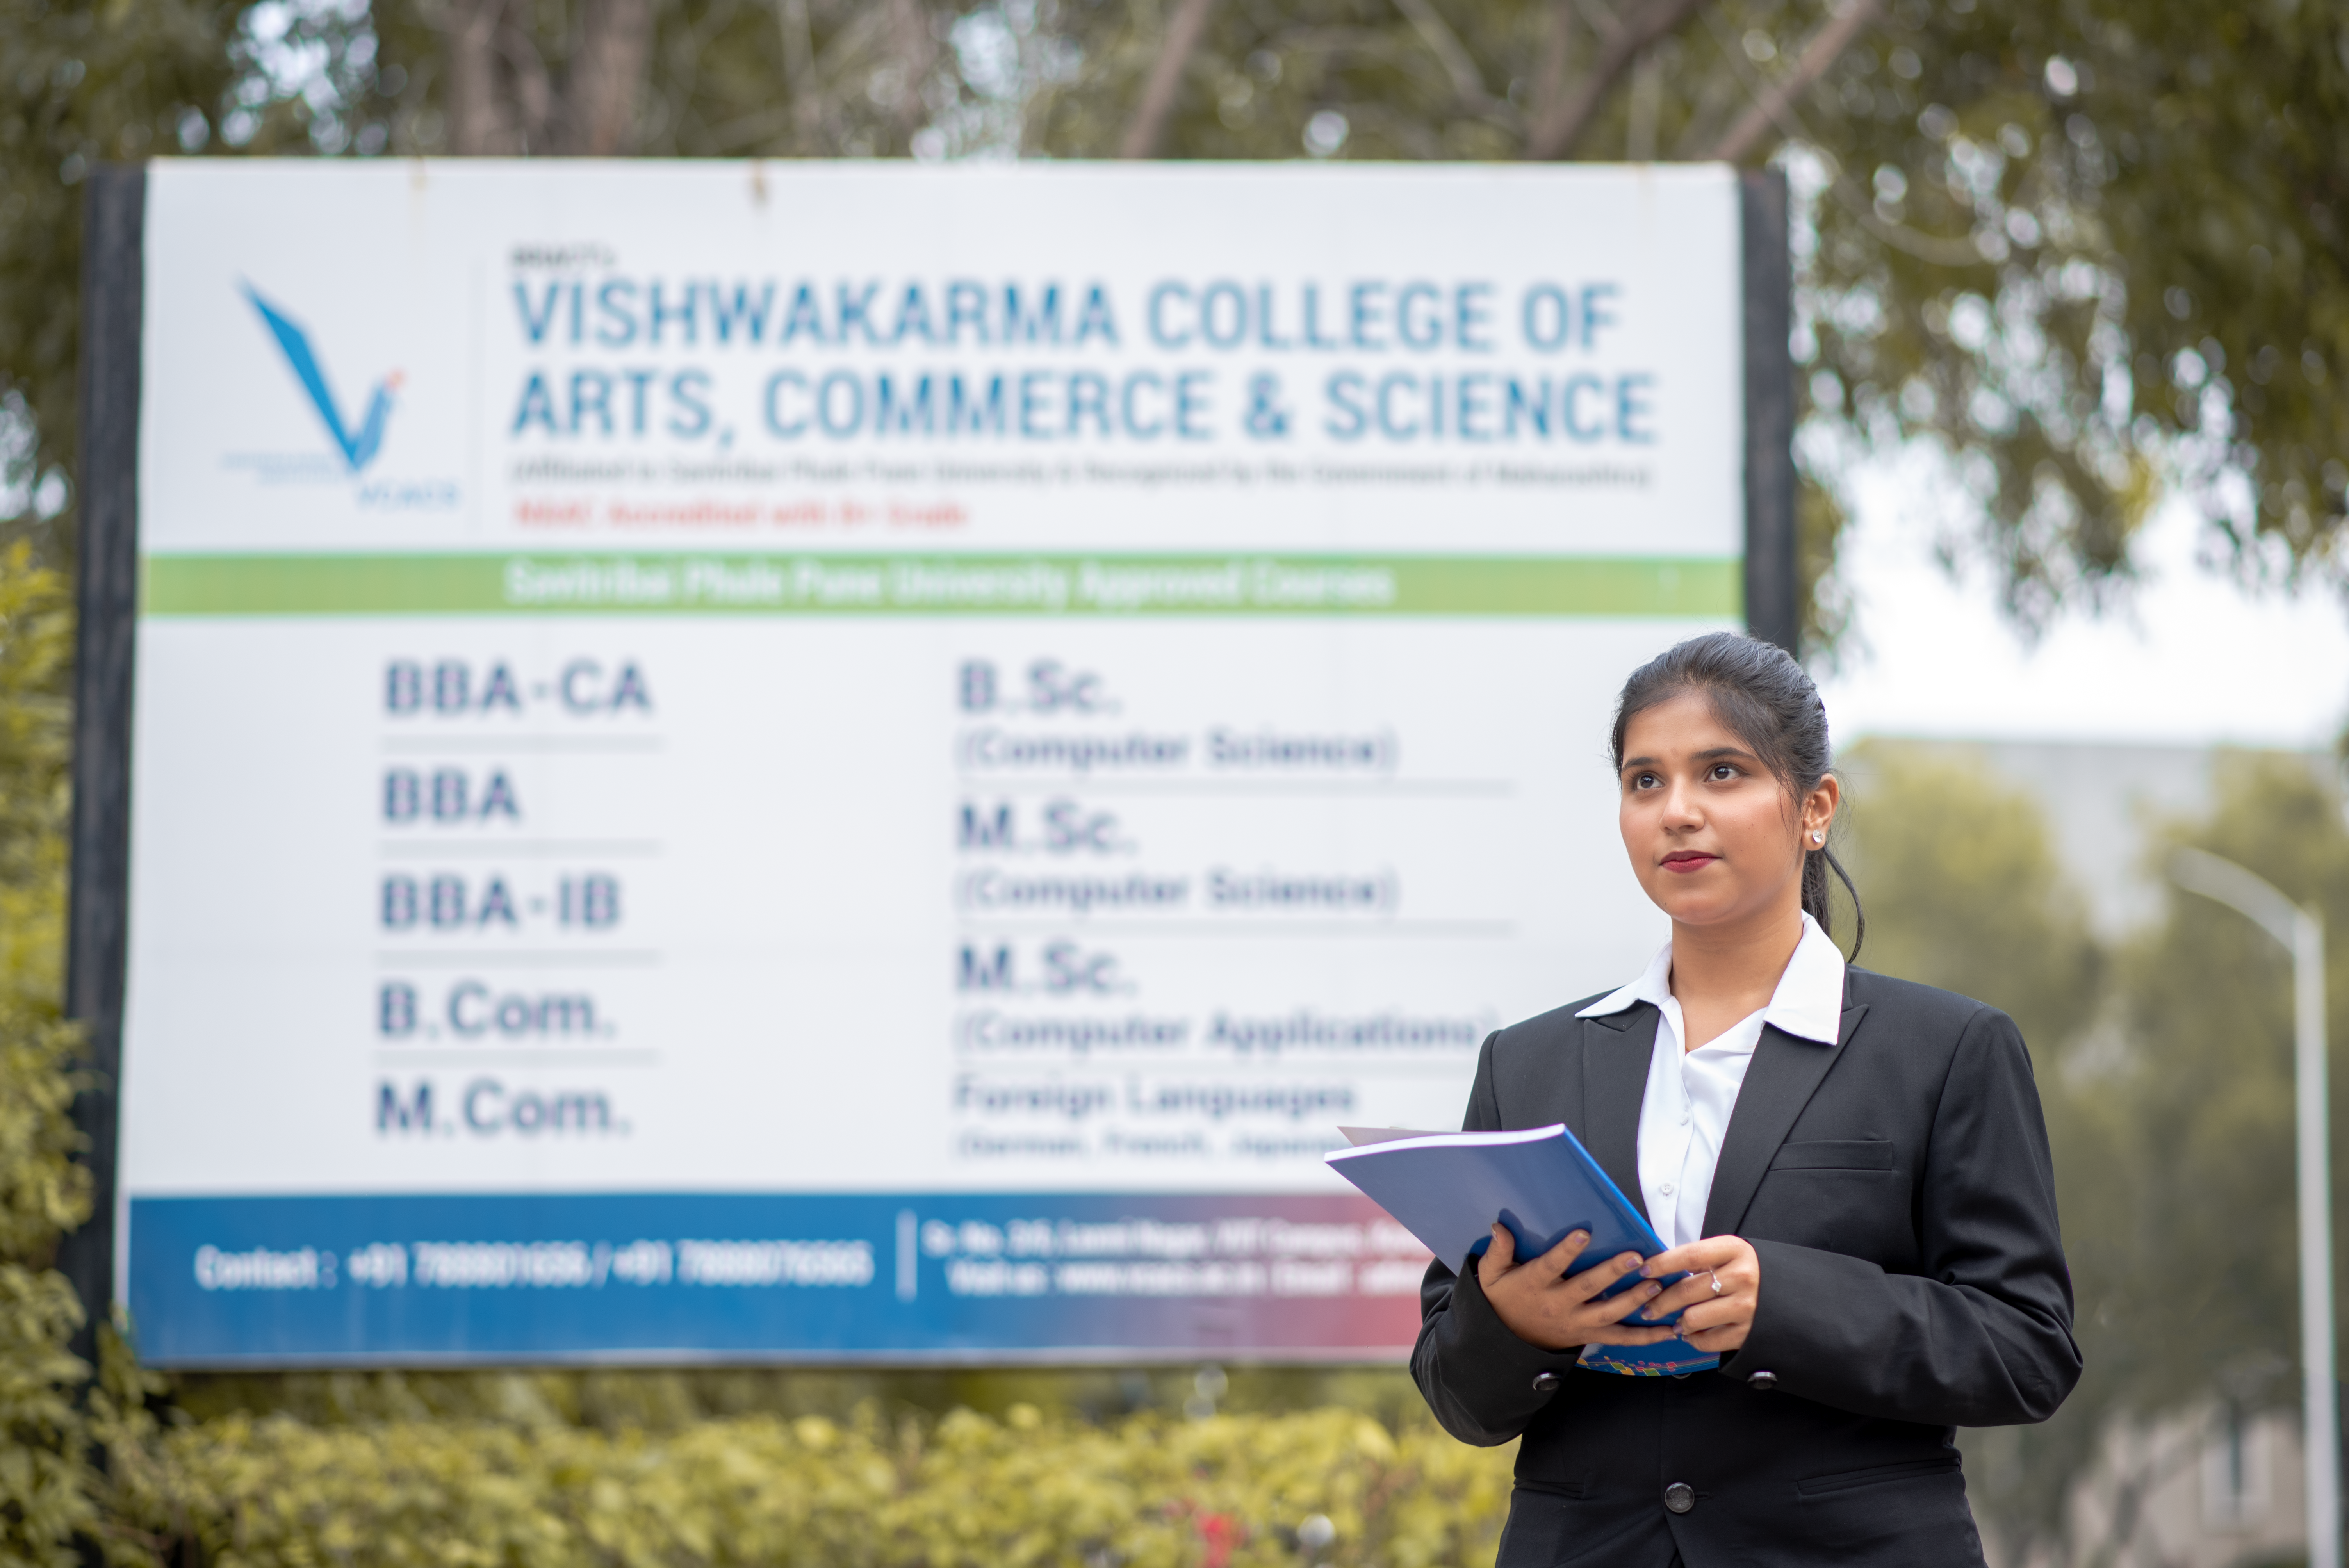 Vishwakarma College of Arts, Commerce & Science - Pune 